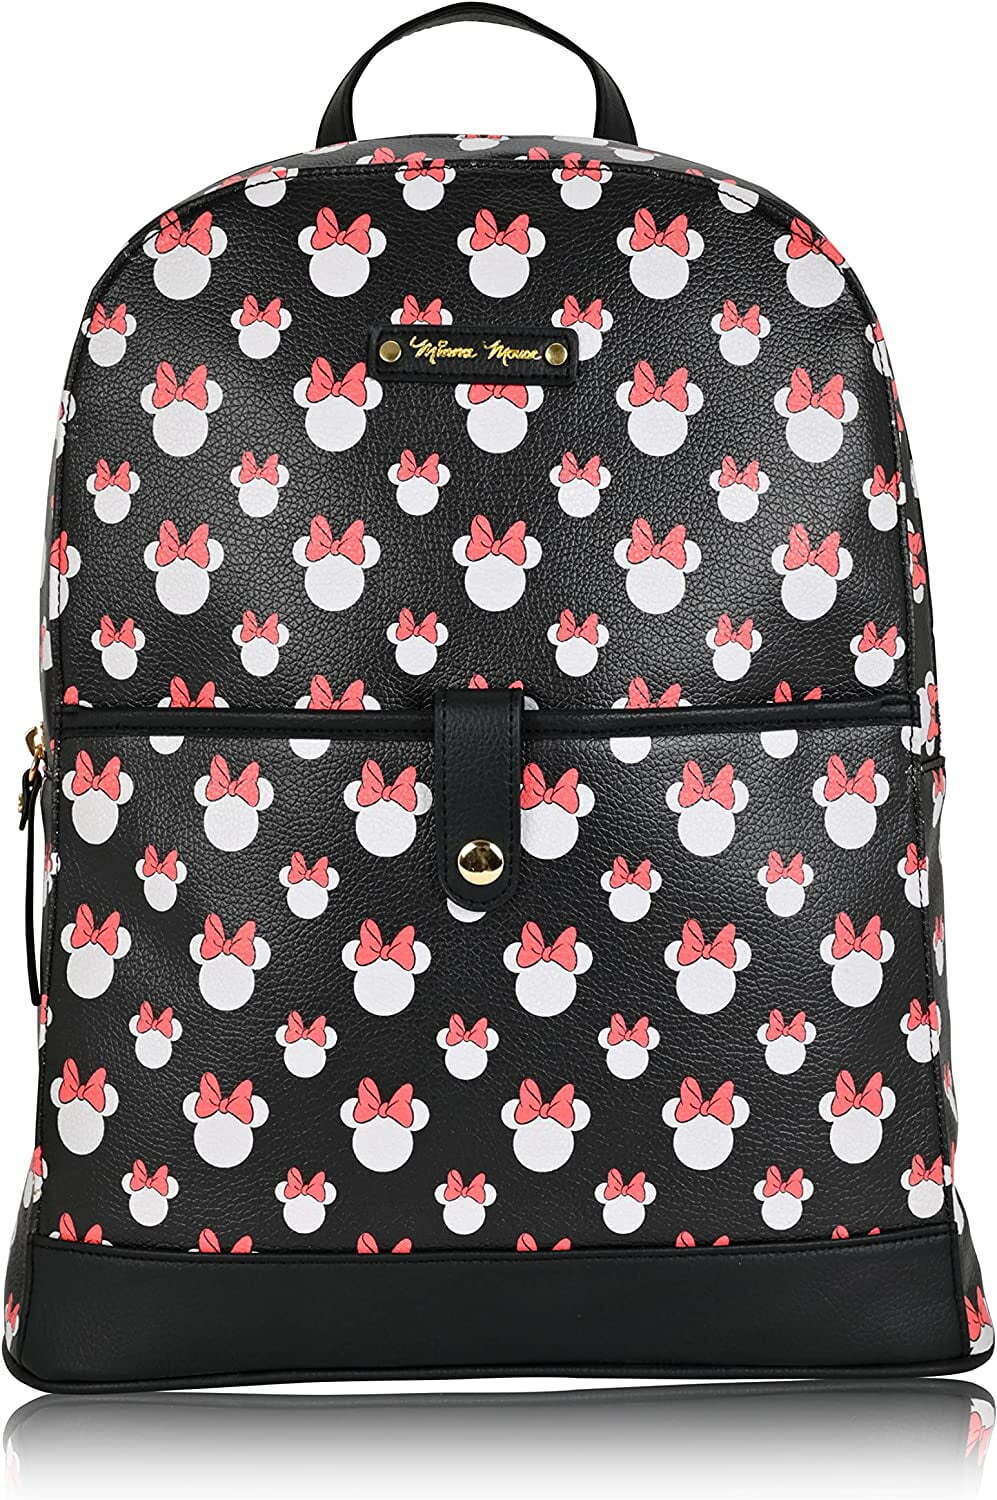 Women’s Minnie Mouse Pattern Mini Backpack, Black